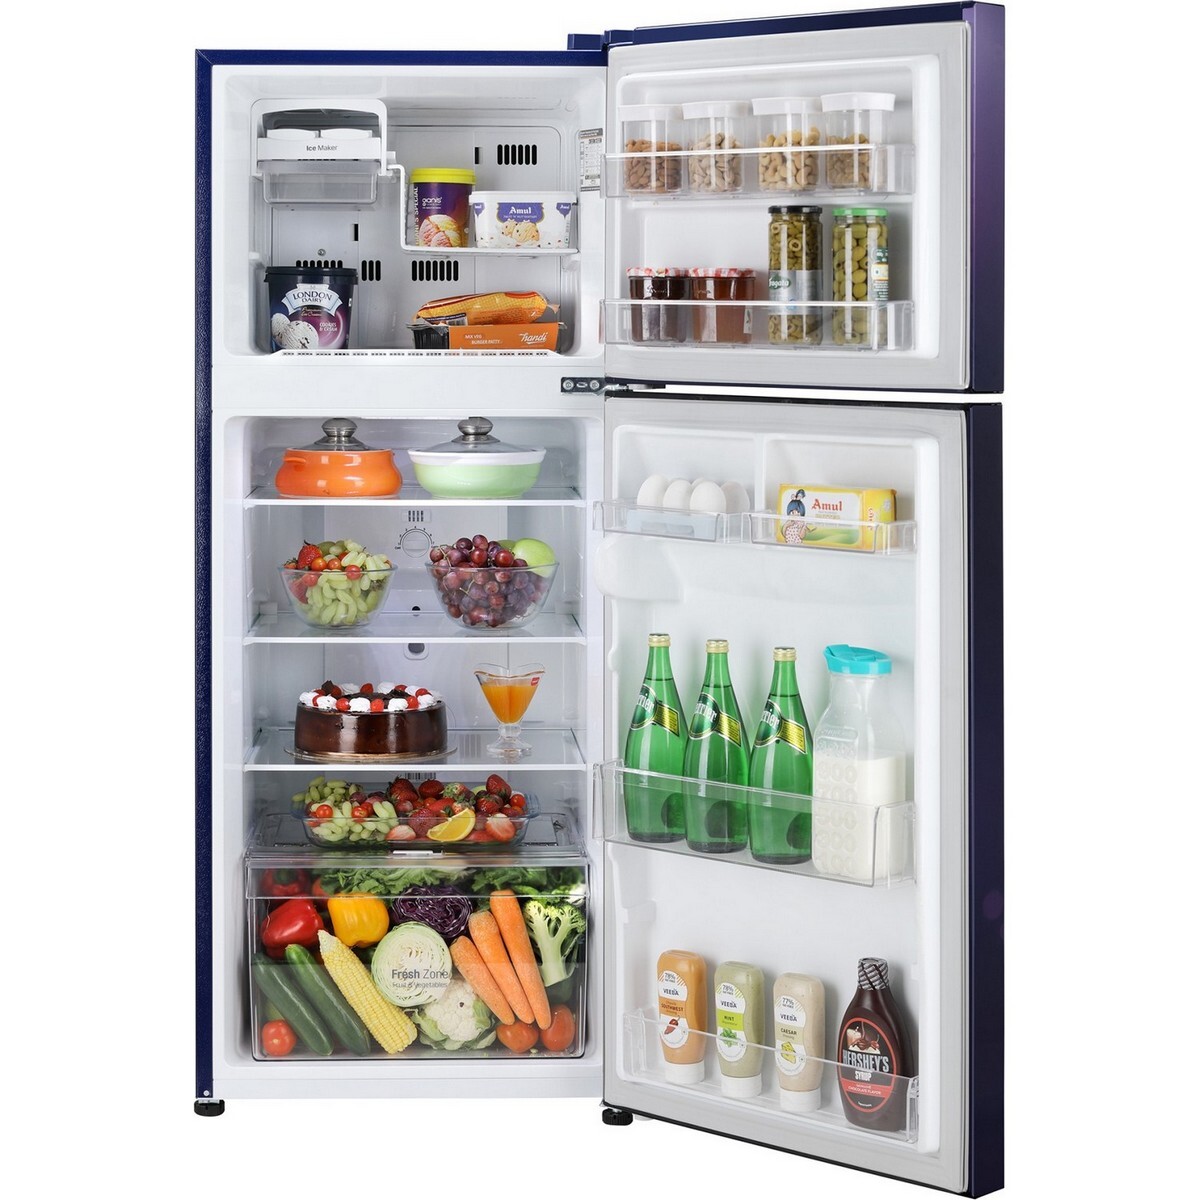 LG Frost Free Double Door 2 Star Refrigerator GL-N292BBEY 242L